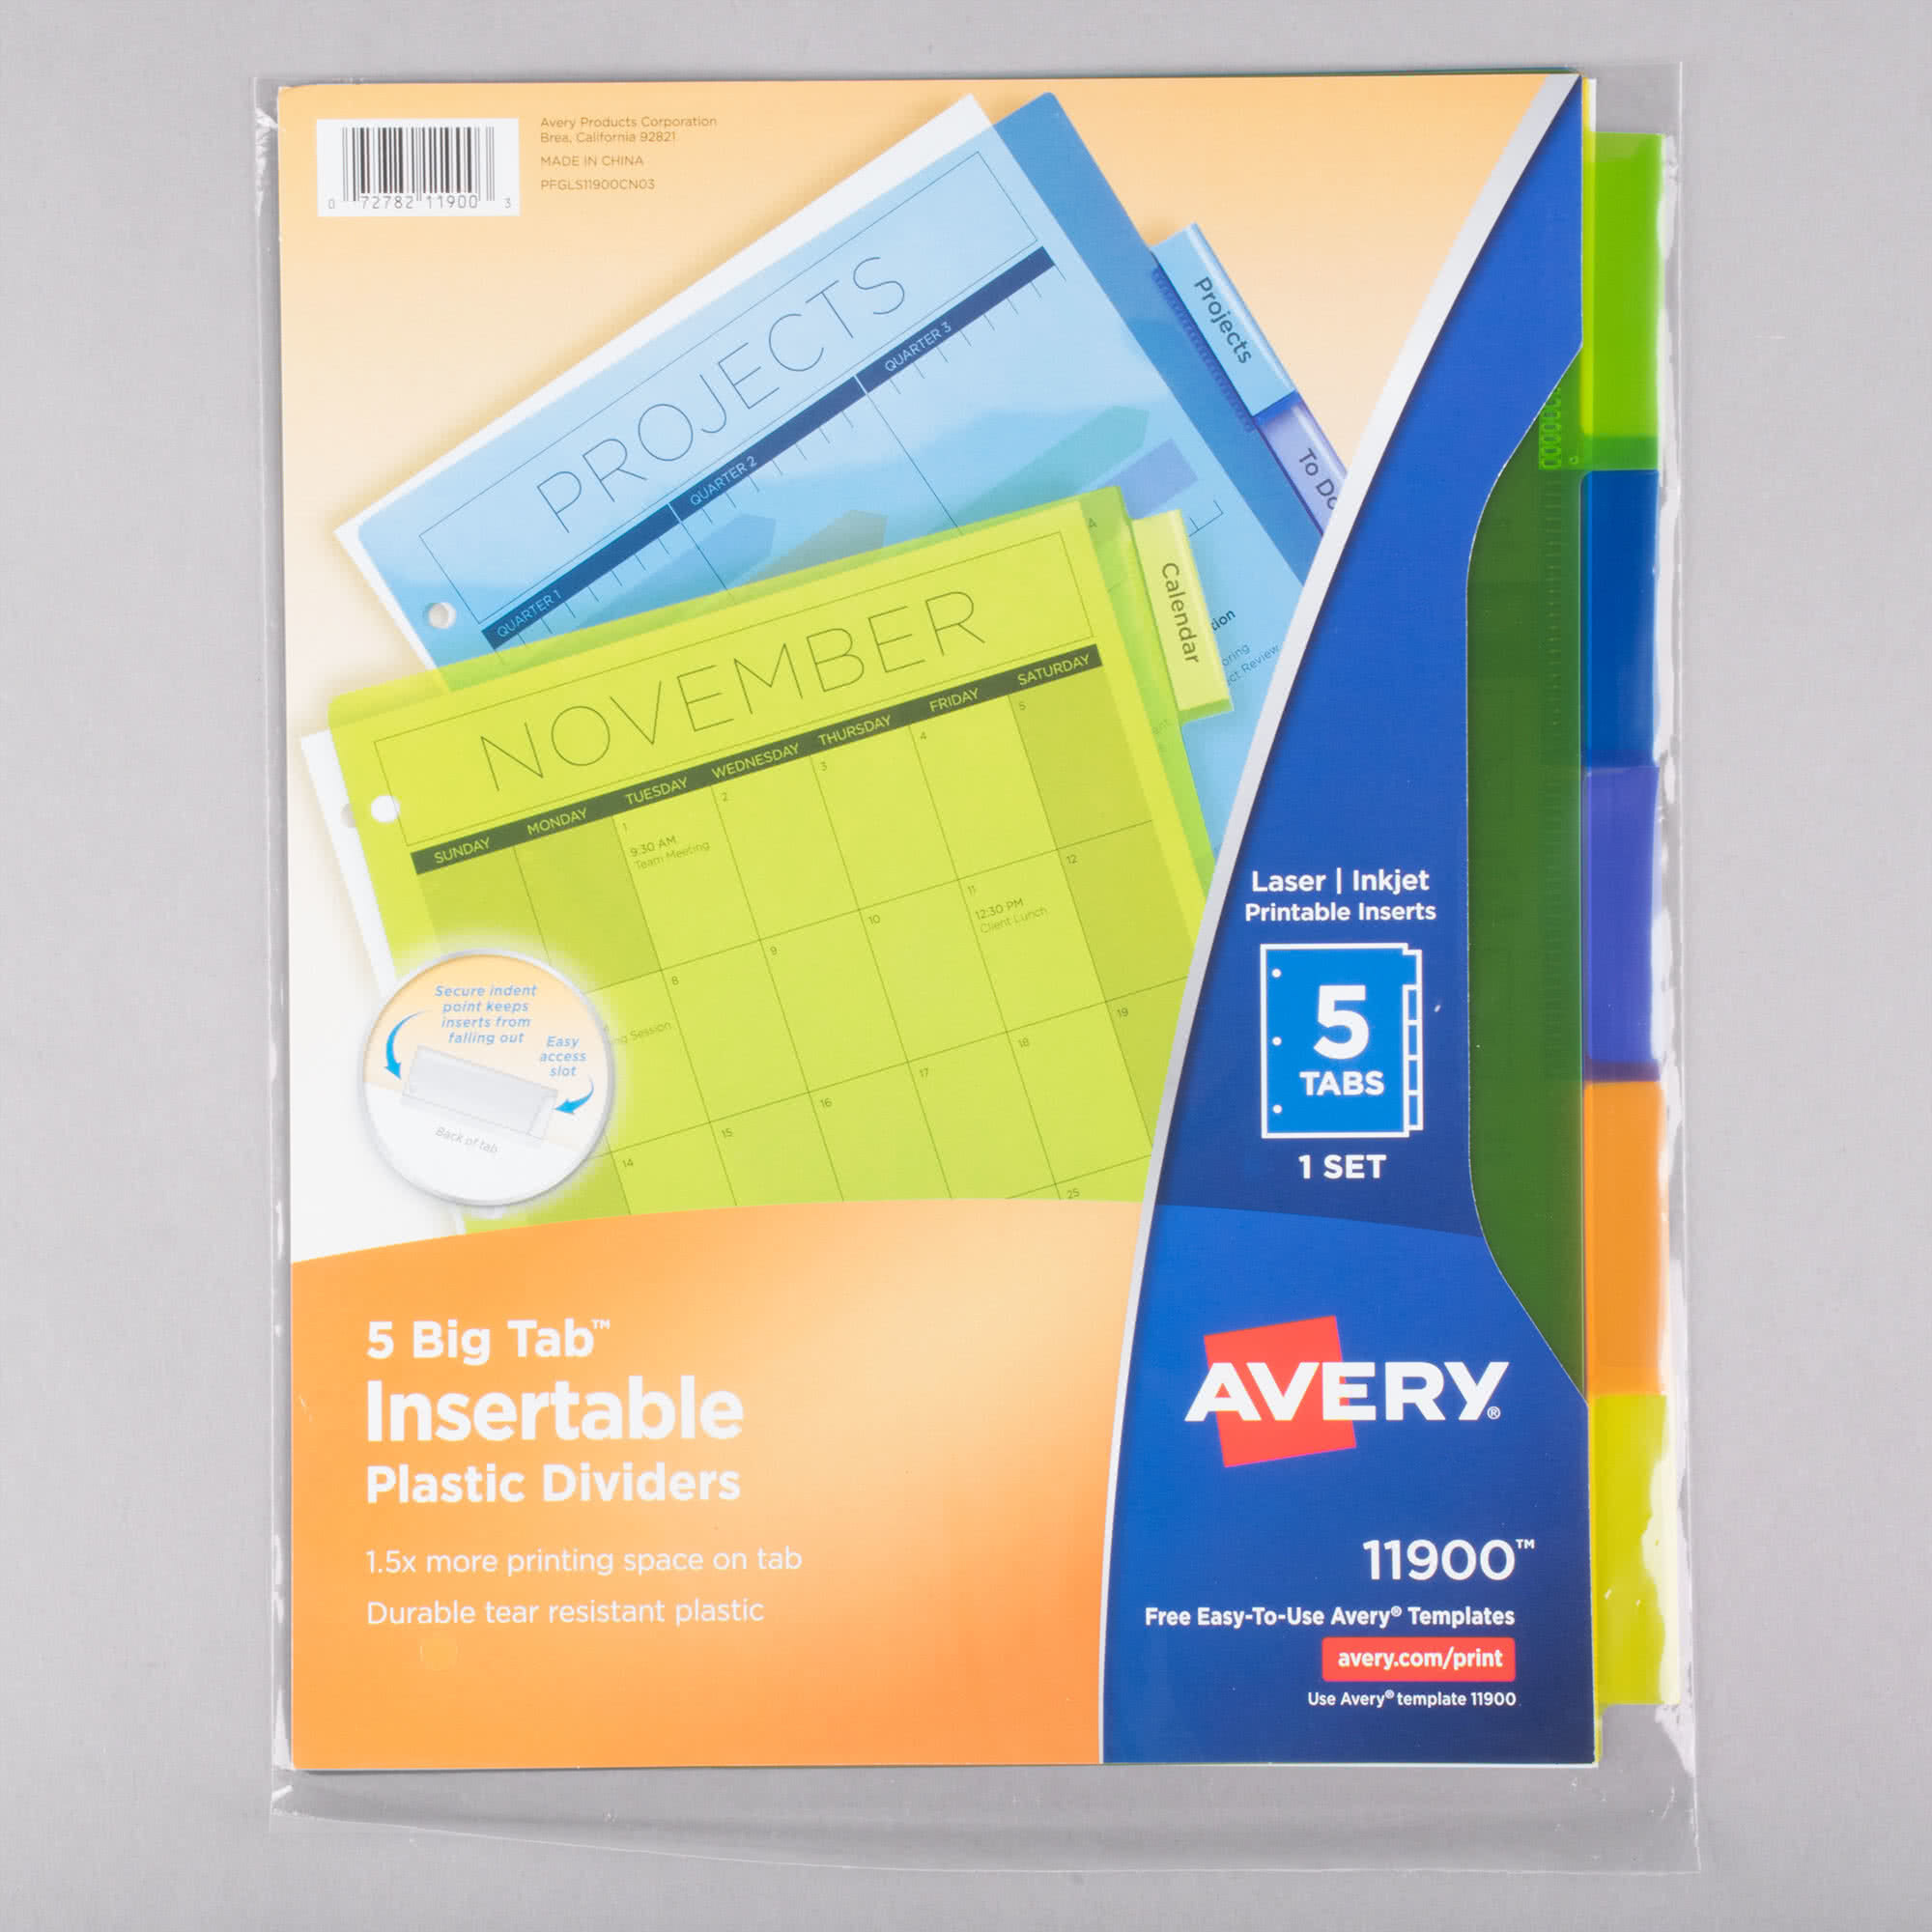 avery-11900-big-tab-5-tab-insertable-multi-color-plastic-dividers